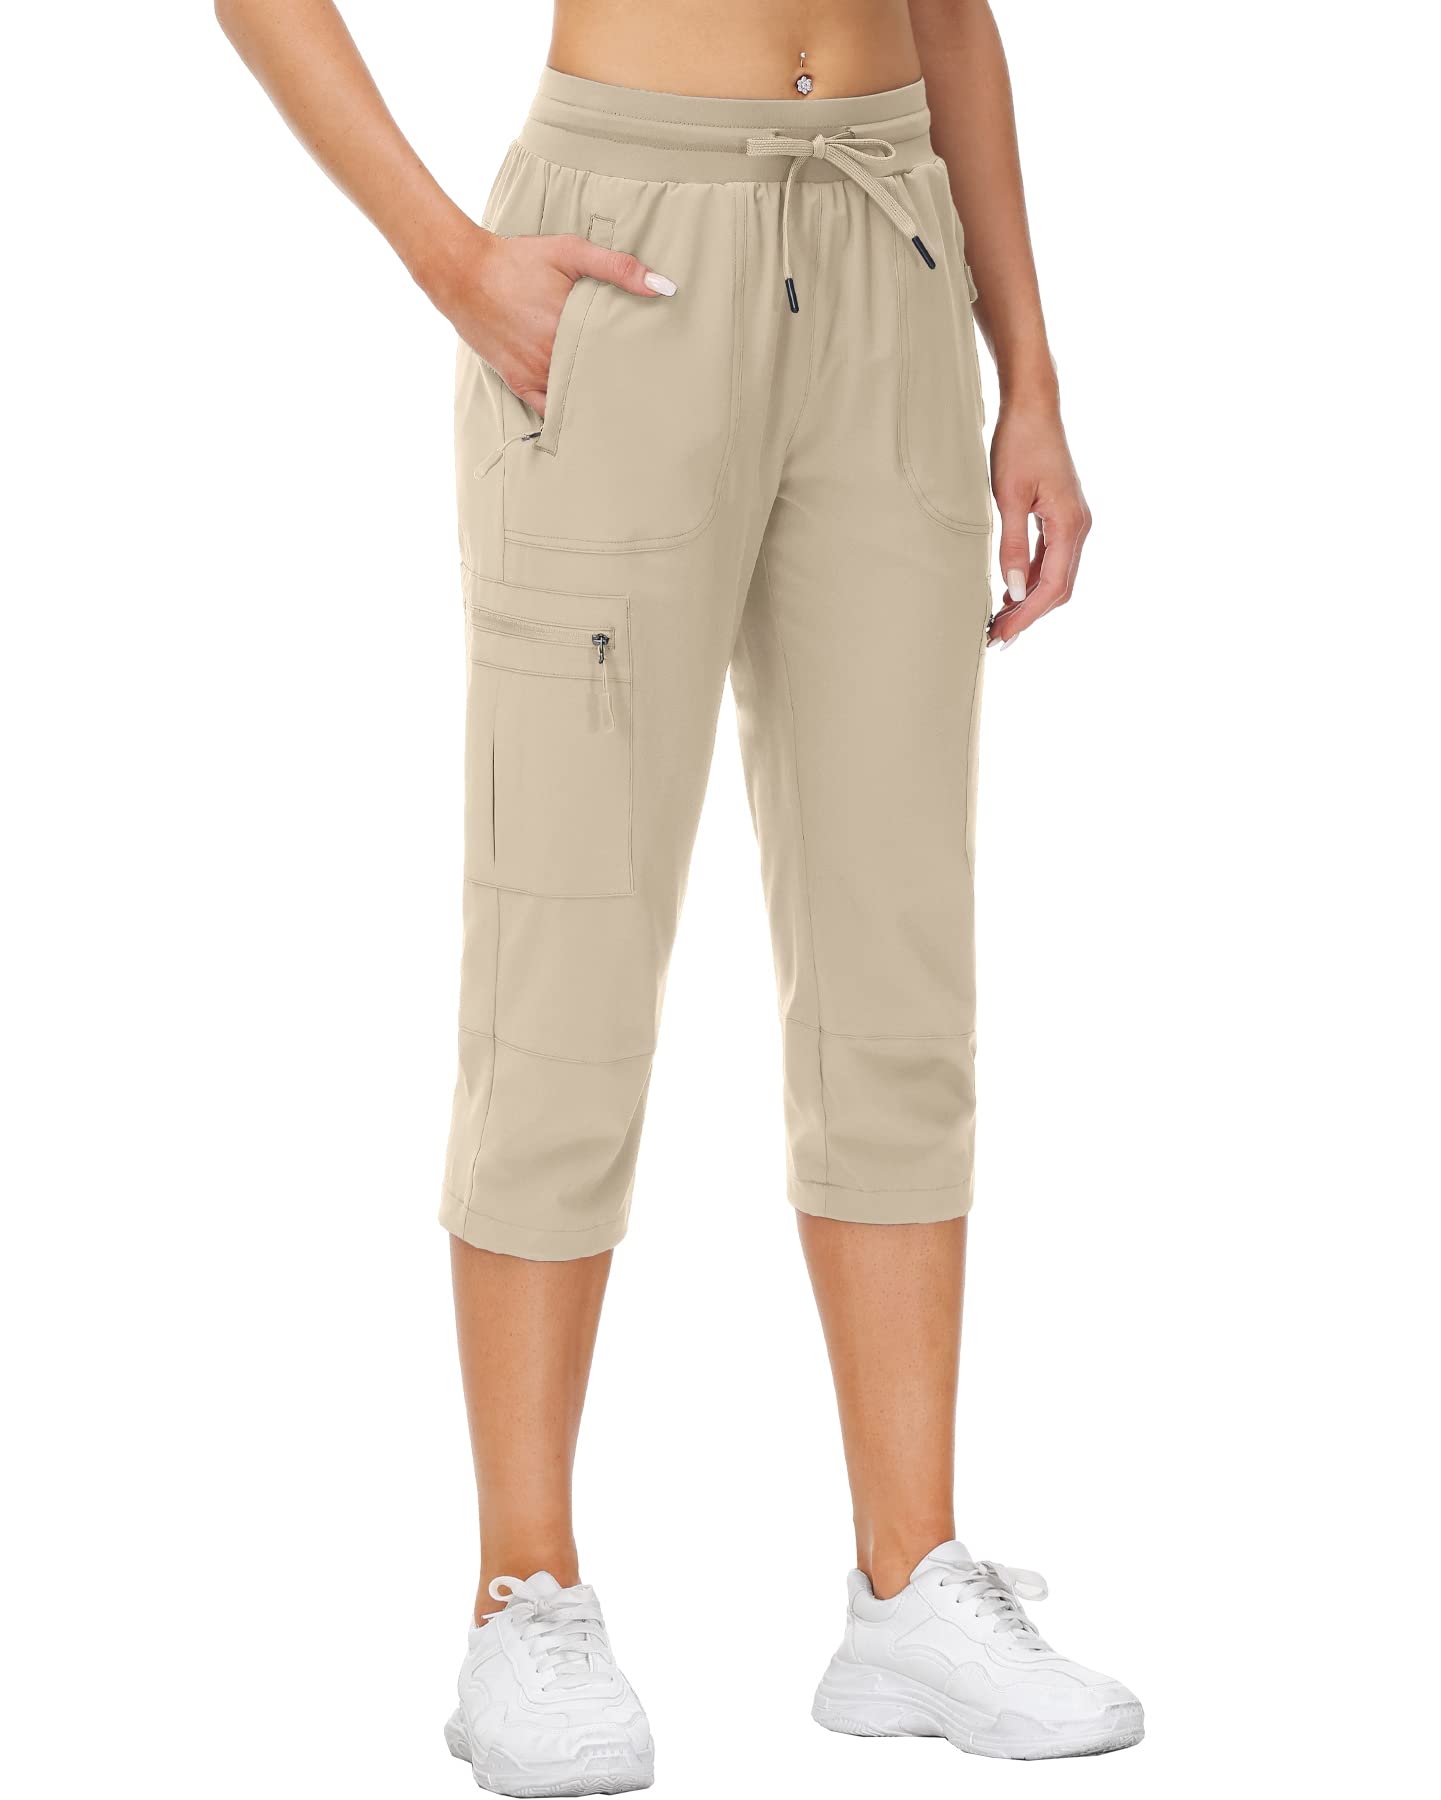 VILIGO Capri Pants for Women Plus Size Elastic Wasit Quick Dry Casual Capri Pants Khaki 3XL